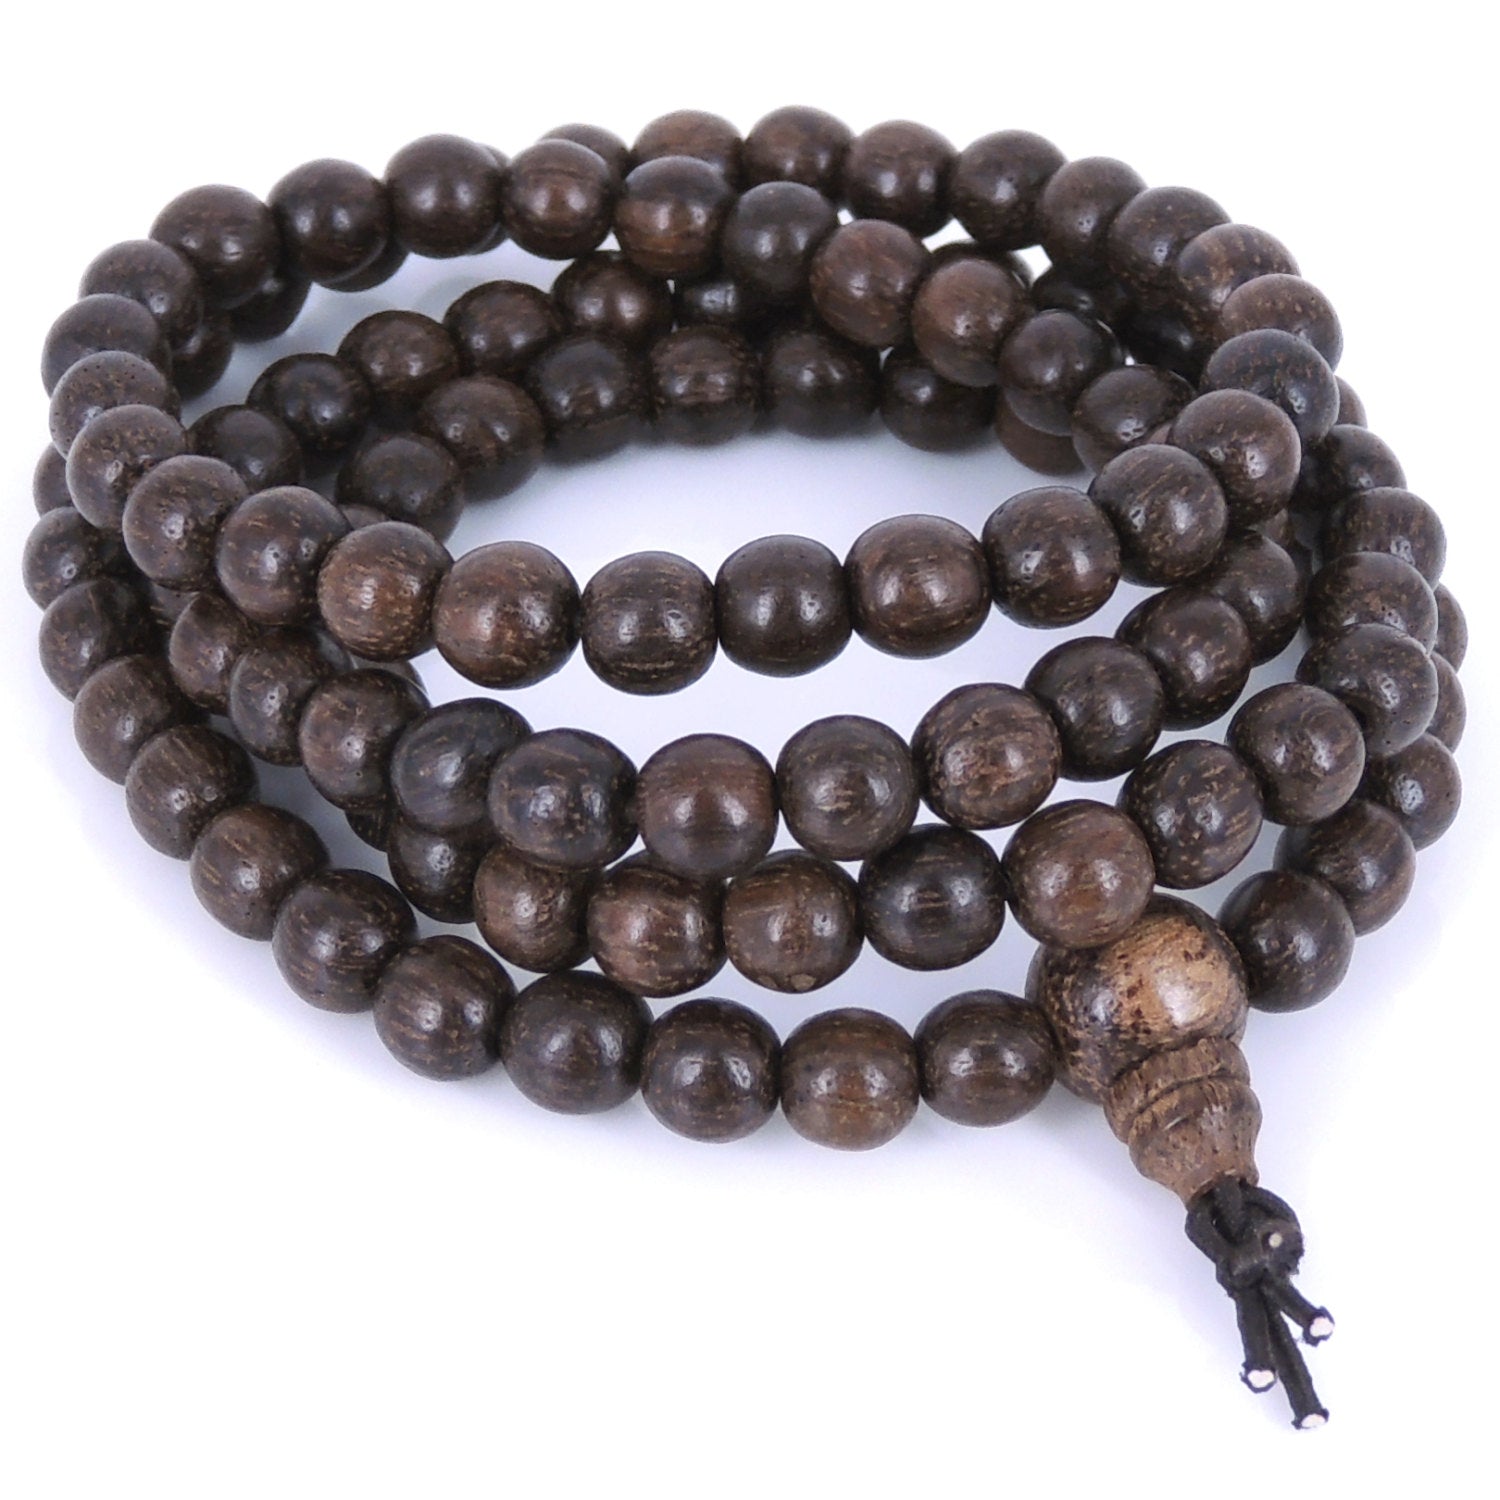 6.5mm Red Vietnamese Agarwood Bracelet/Necklace 108 Beads for Meditation - Gem & Silver AW009